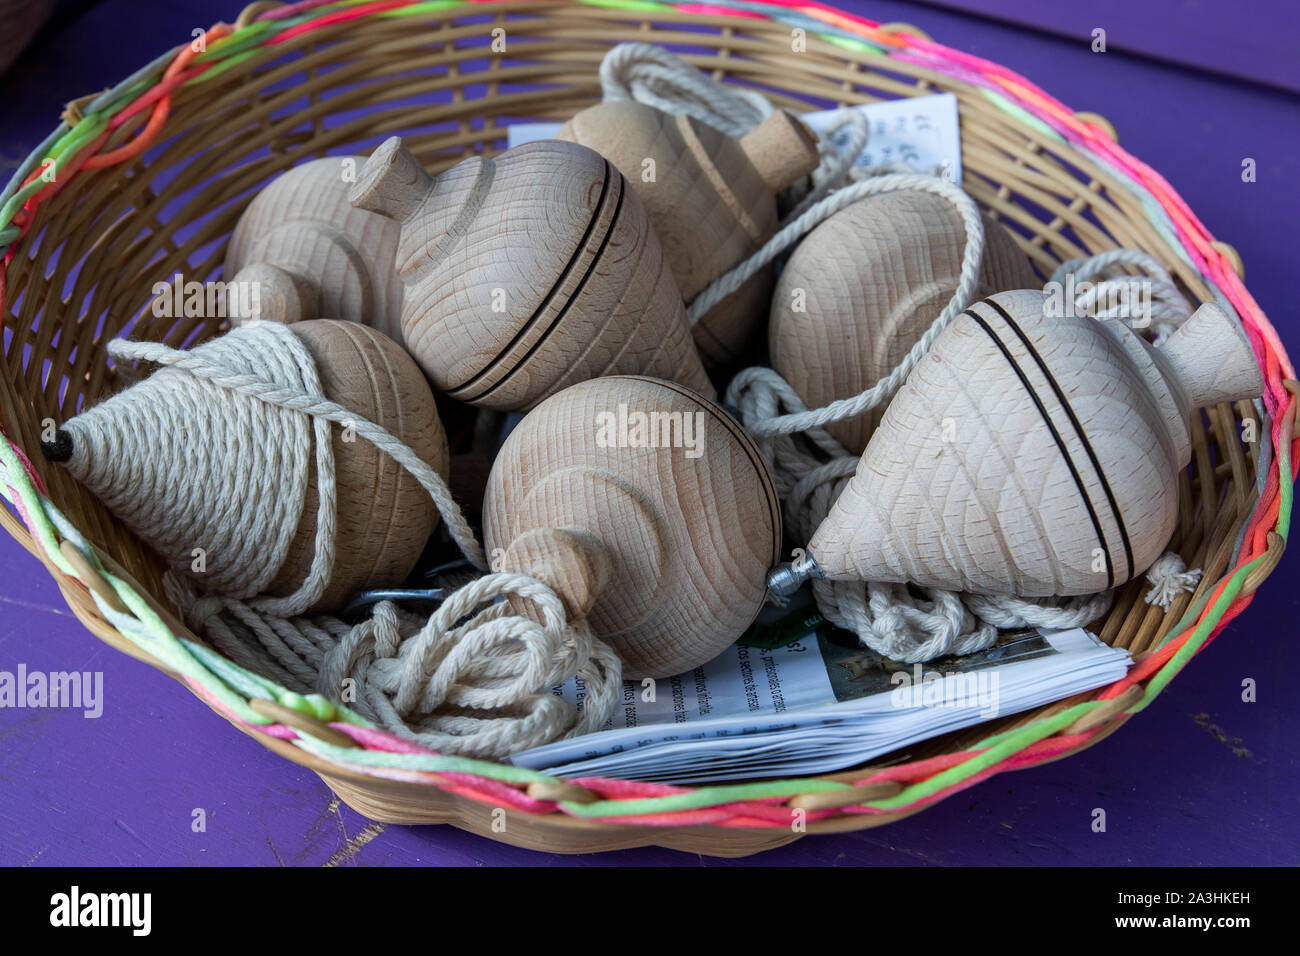 Wicker basket in the market full of wooden tops. Spain Stock Photo